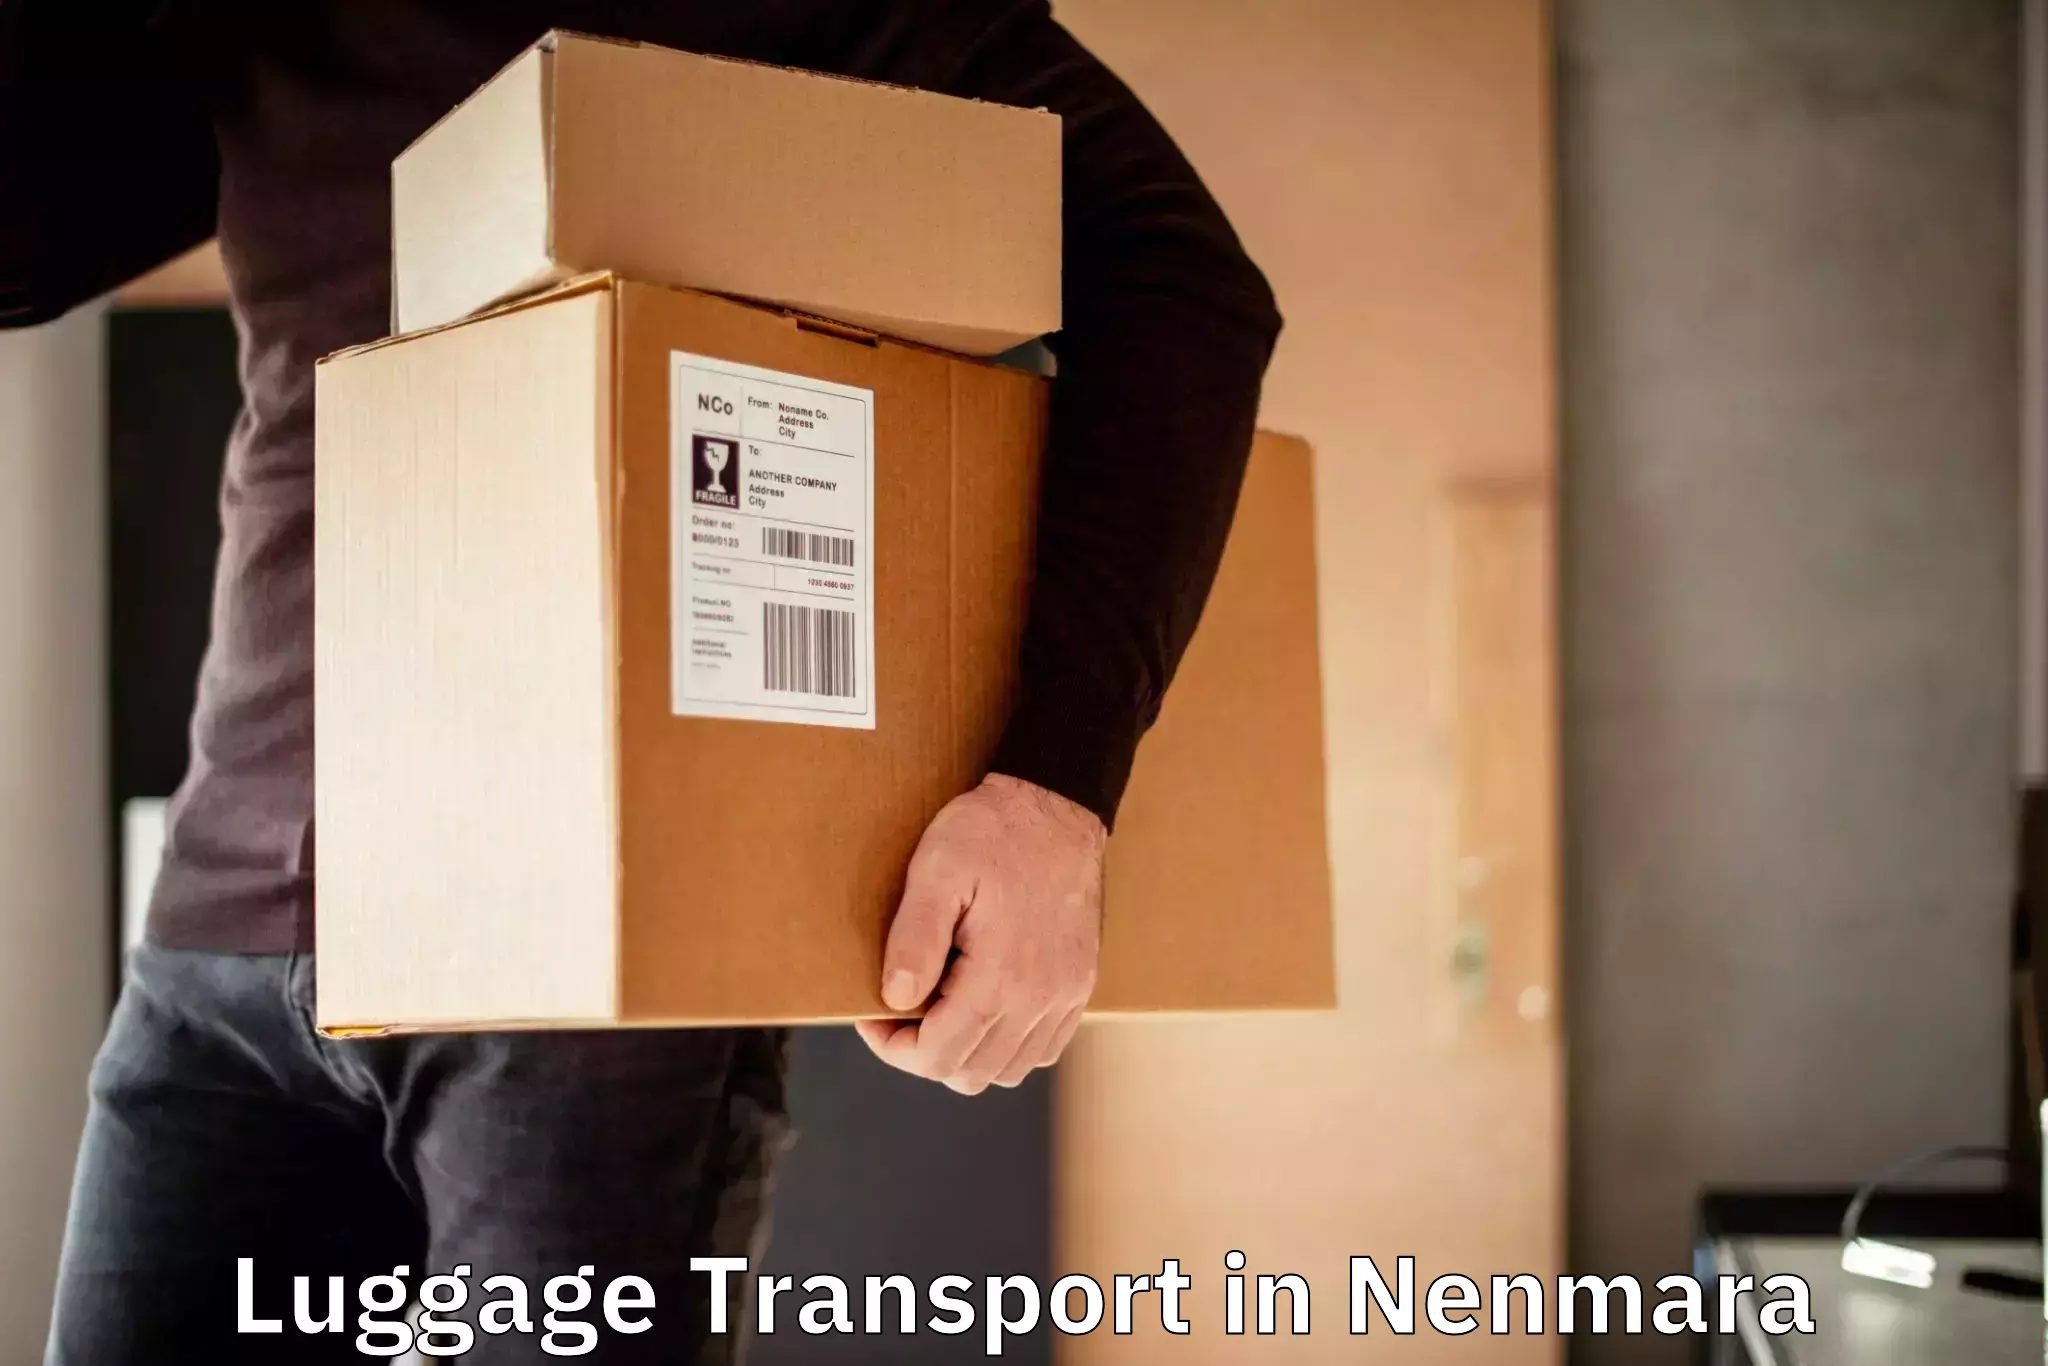 Luggage transport tips in Nenmara